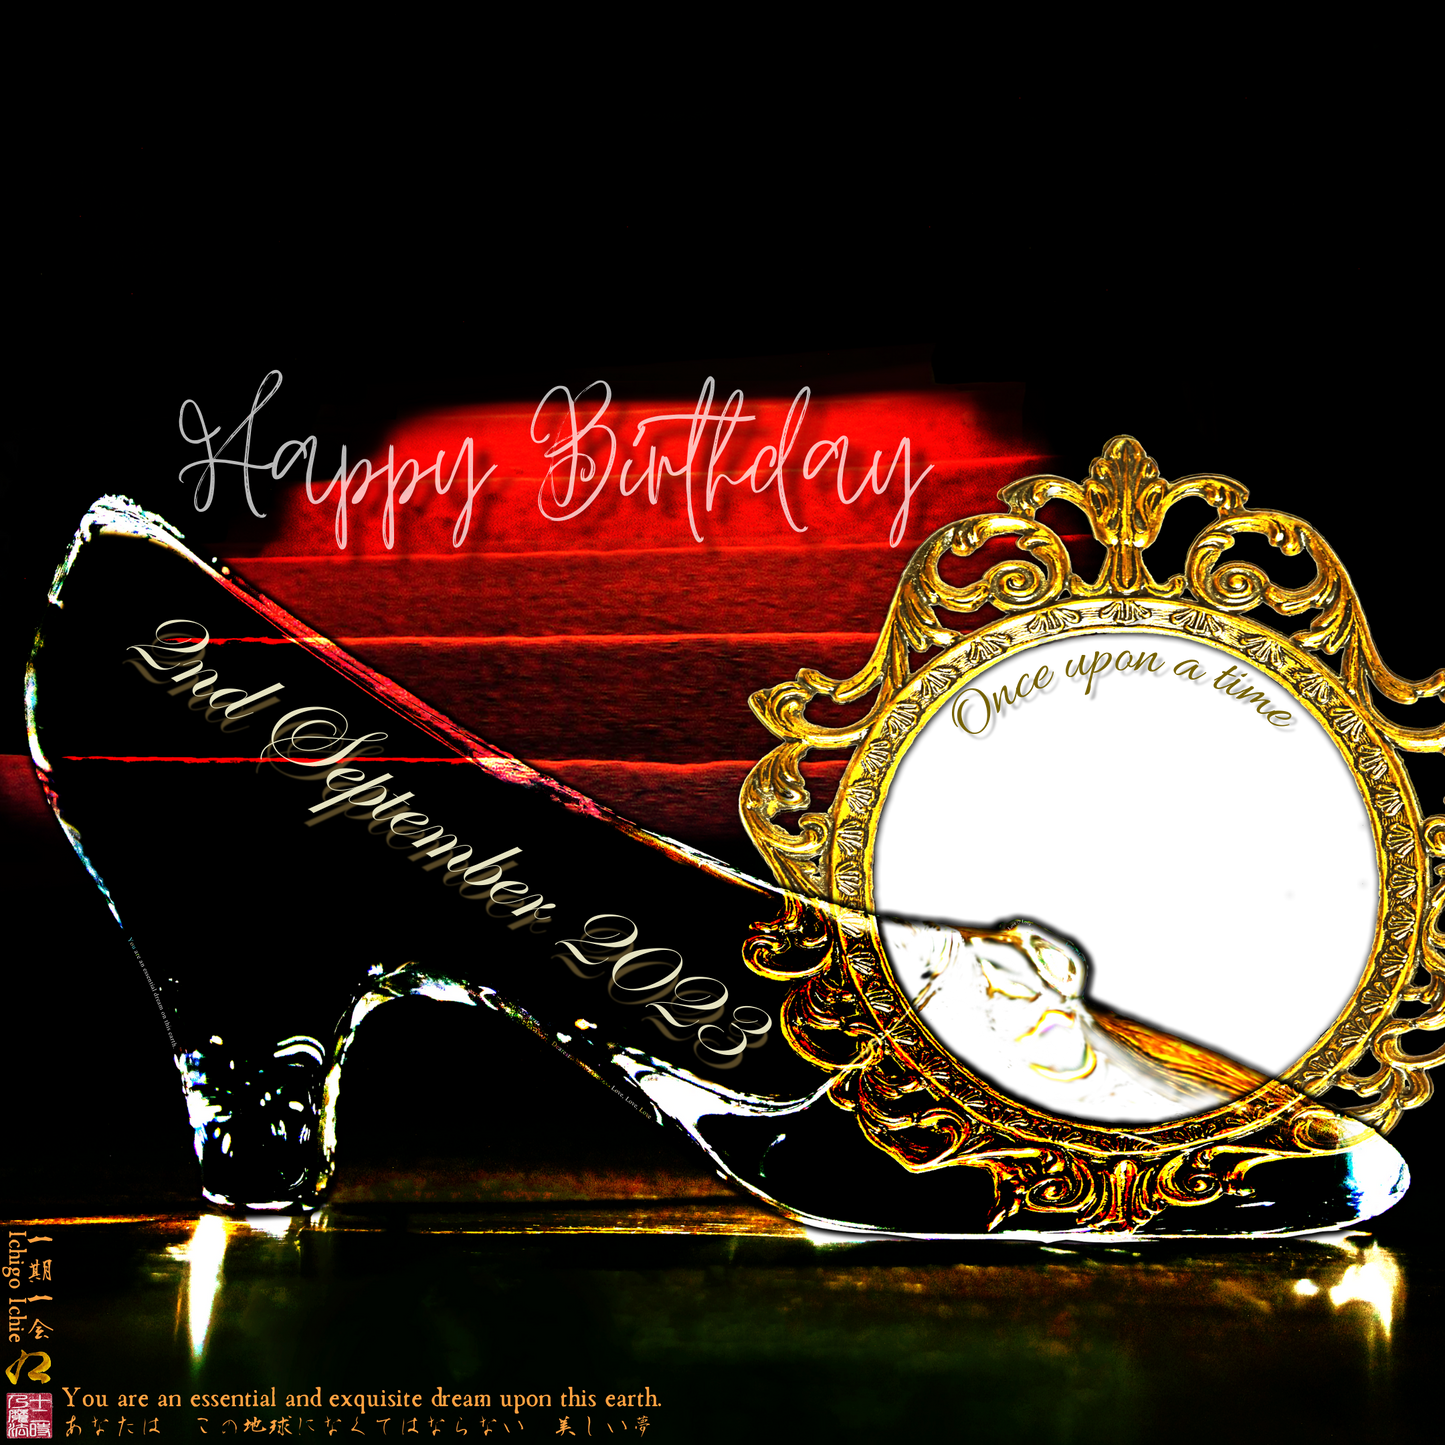 Happy Birthday Glass Slipper "Ichigo Ichie" 2nd September 2023 the Right (1-of-1) NFT Art